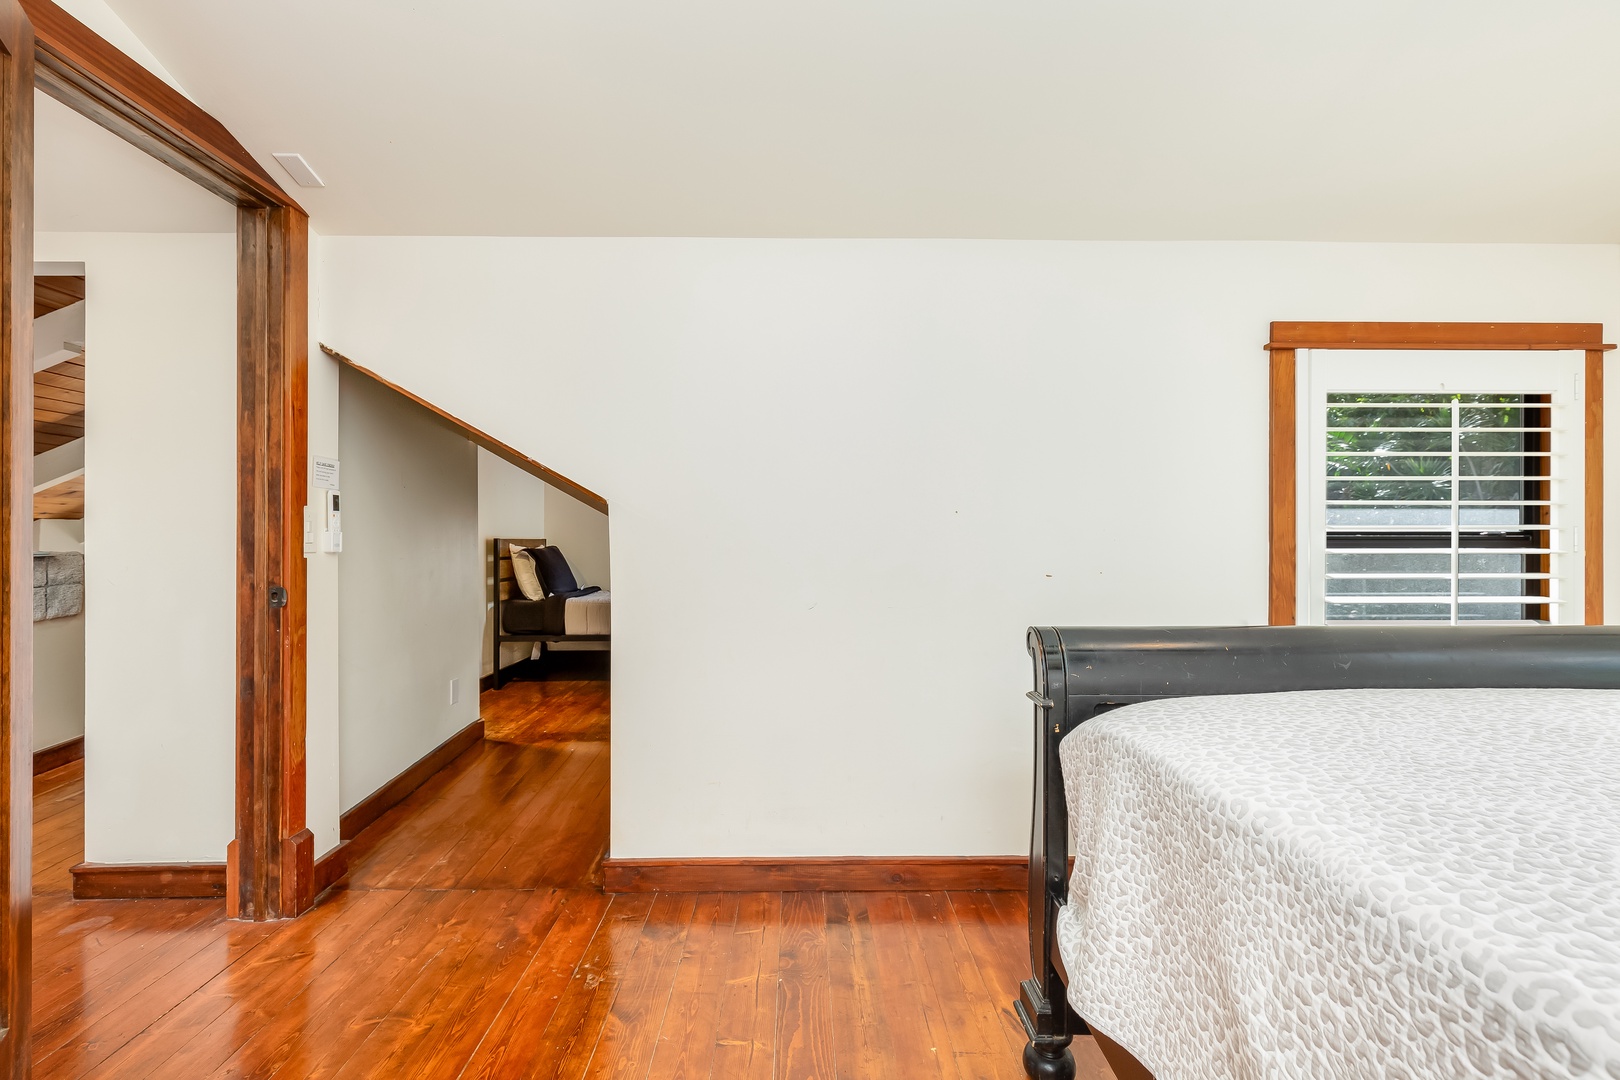 Haleiwa Vacation Rentals, Mele Makana - Guest bedroom 4 is connected to guest bedroom 5